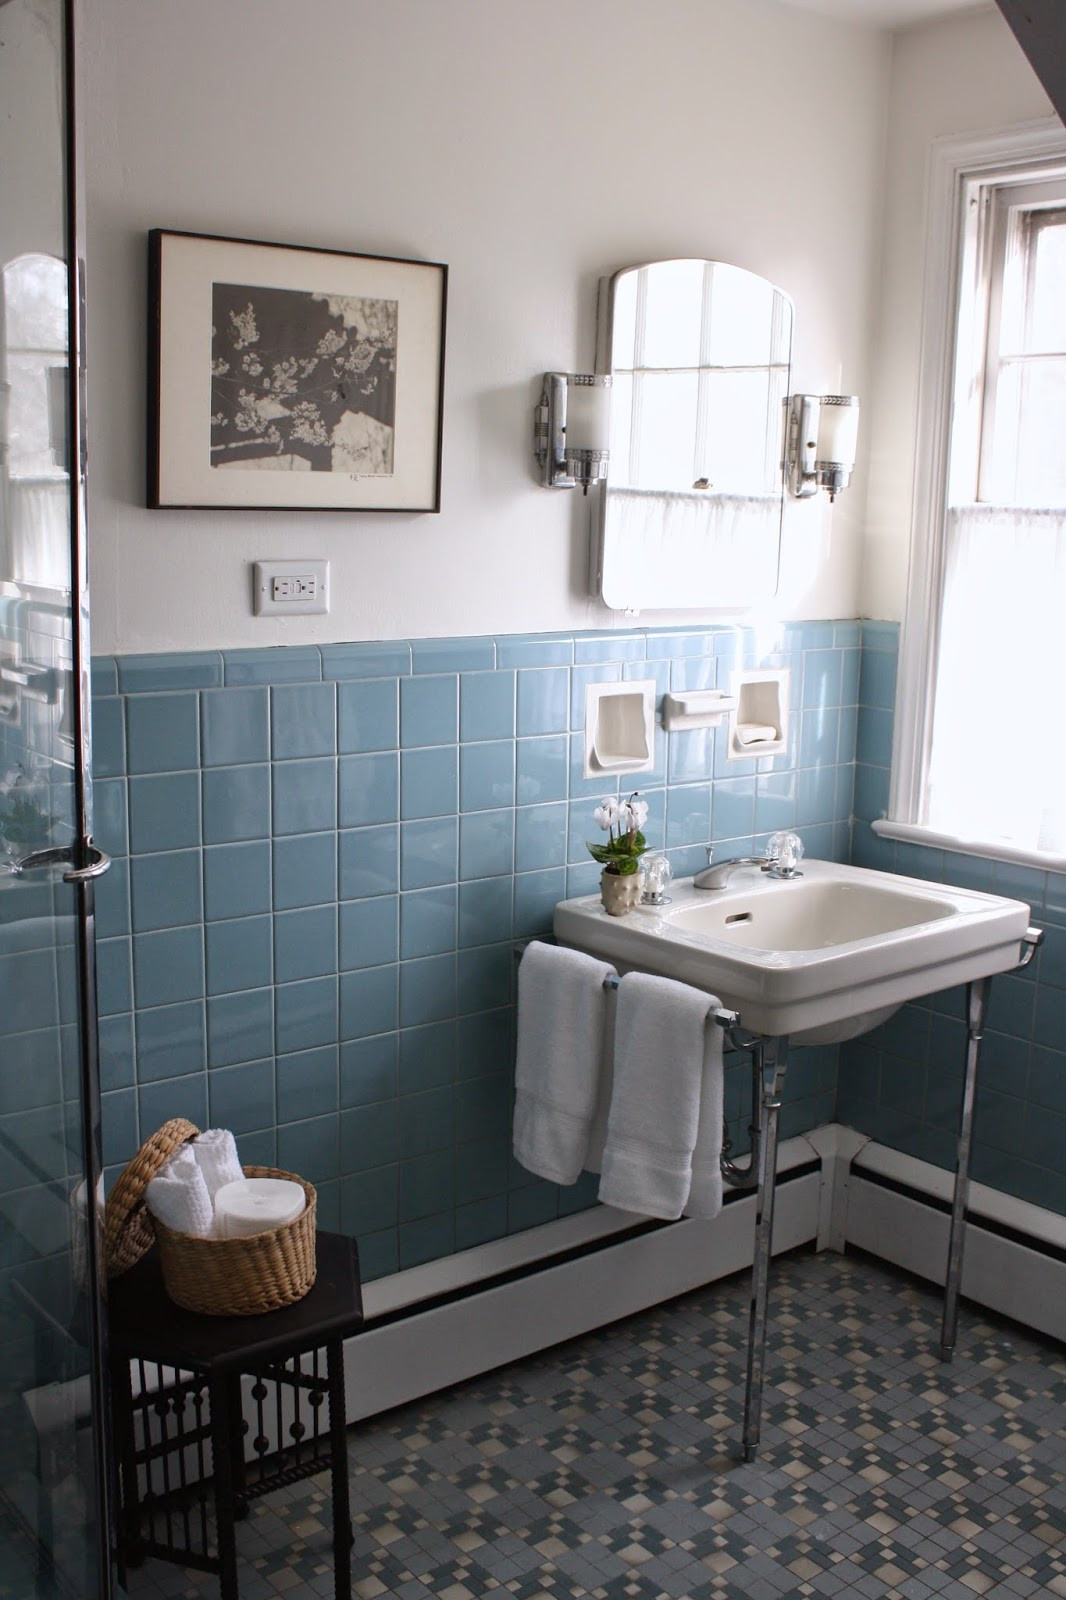 Vintage Bathroom Decorating Ideas
 36 nice ideas and pictures of vintage bathroom tile design